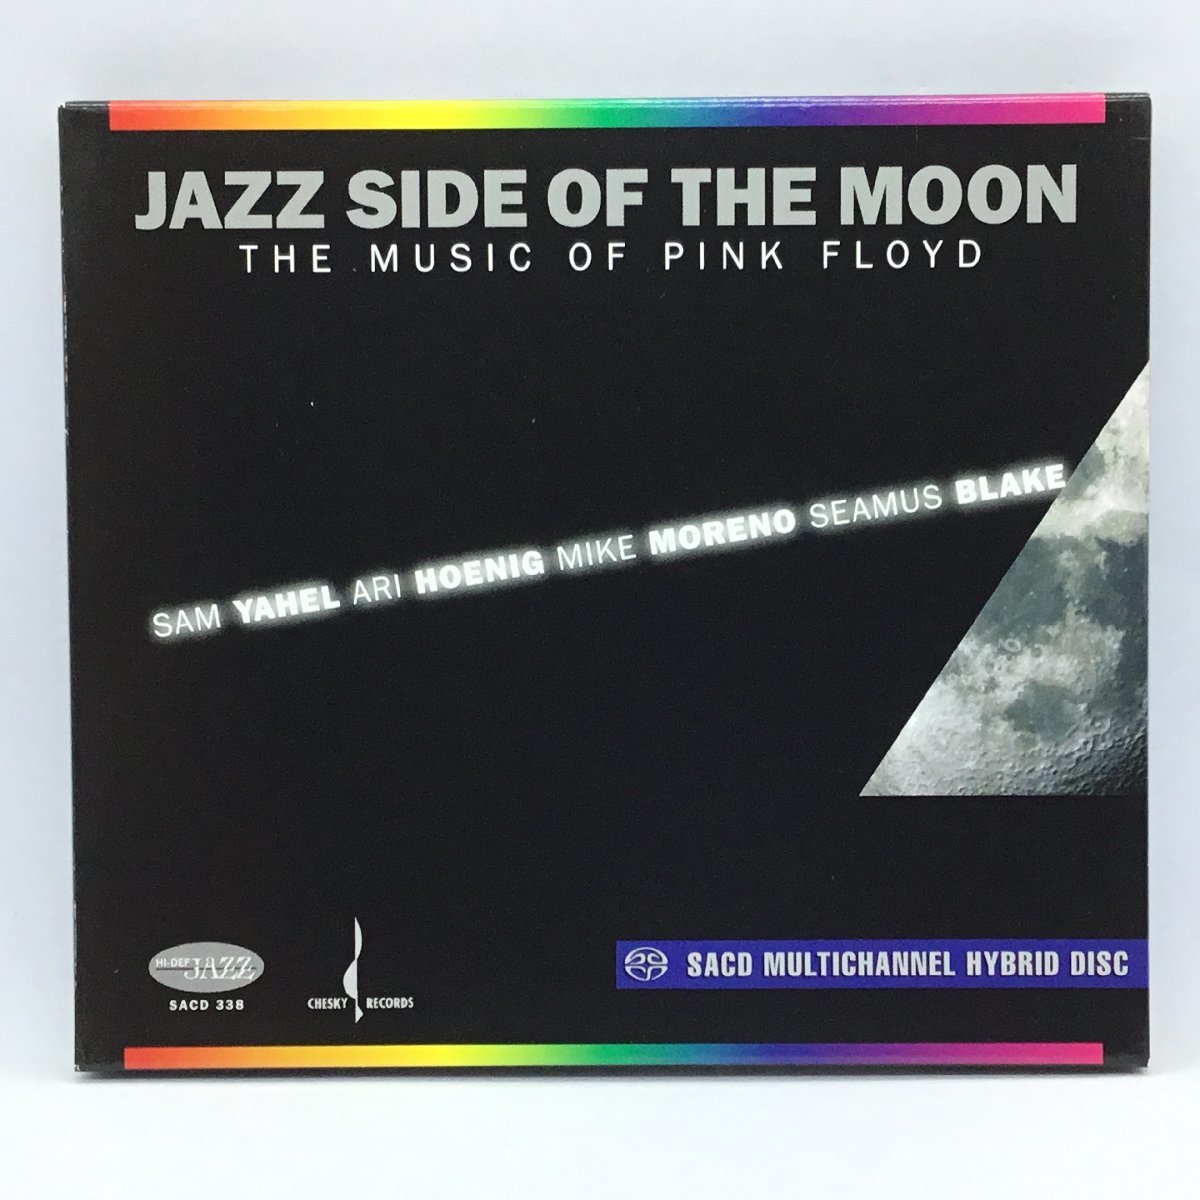 SACDハイブリッド◇Sam Yahel, Ari Hoenig, Mike Moreno, Seamus Blake / Jazz Side Of The Moon (The Music Of Pink Floyd) (SACD HYBRID)の画像1